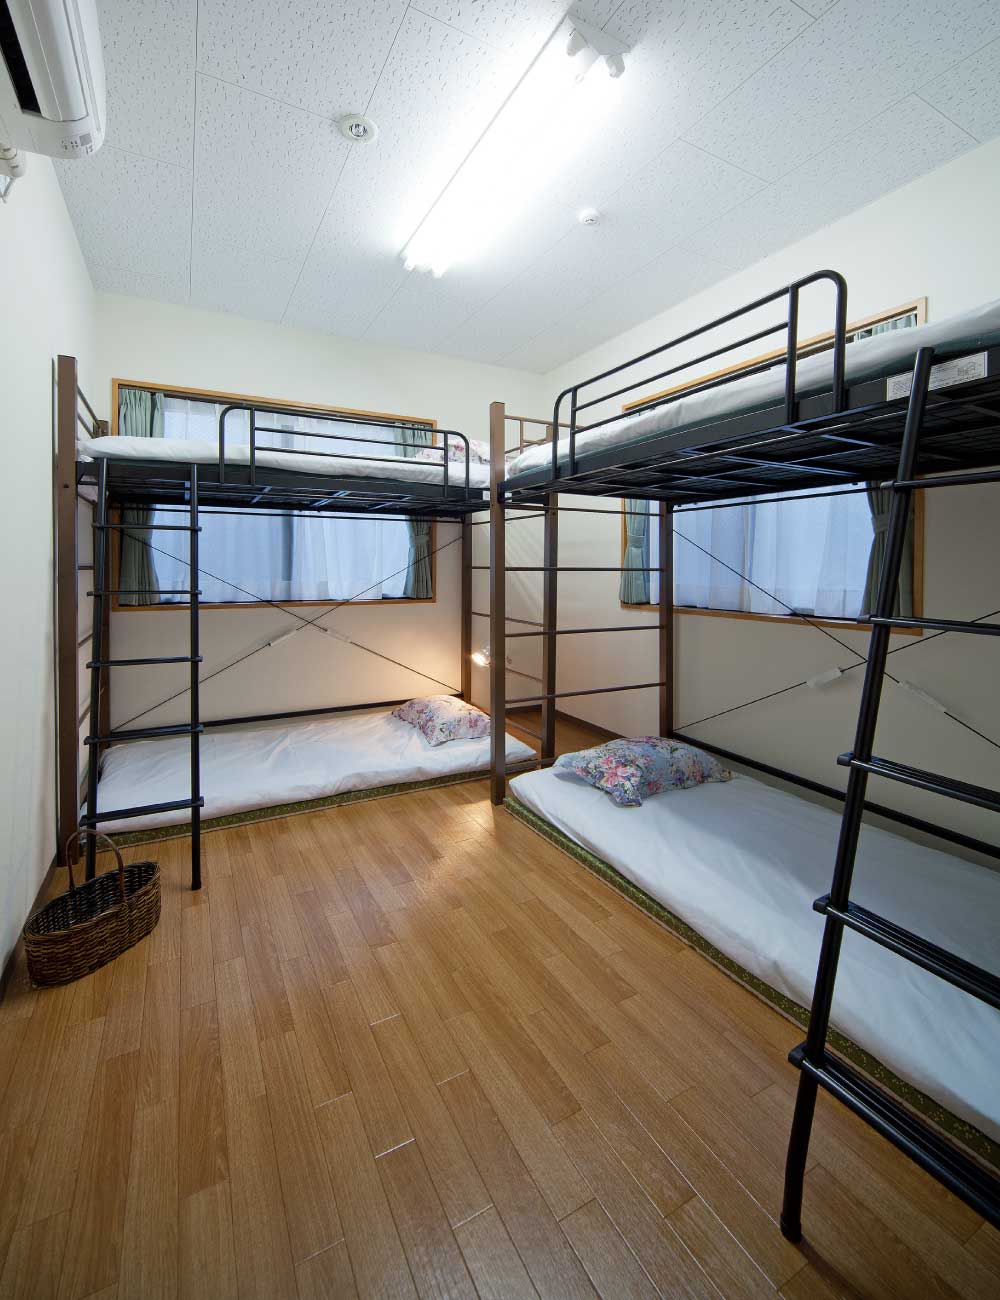 Female dormitory